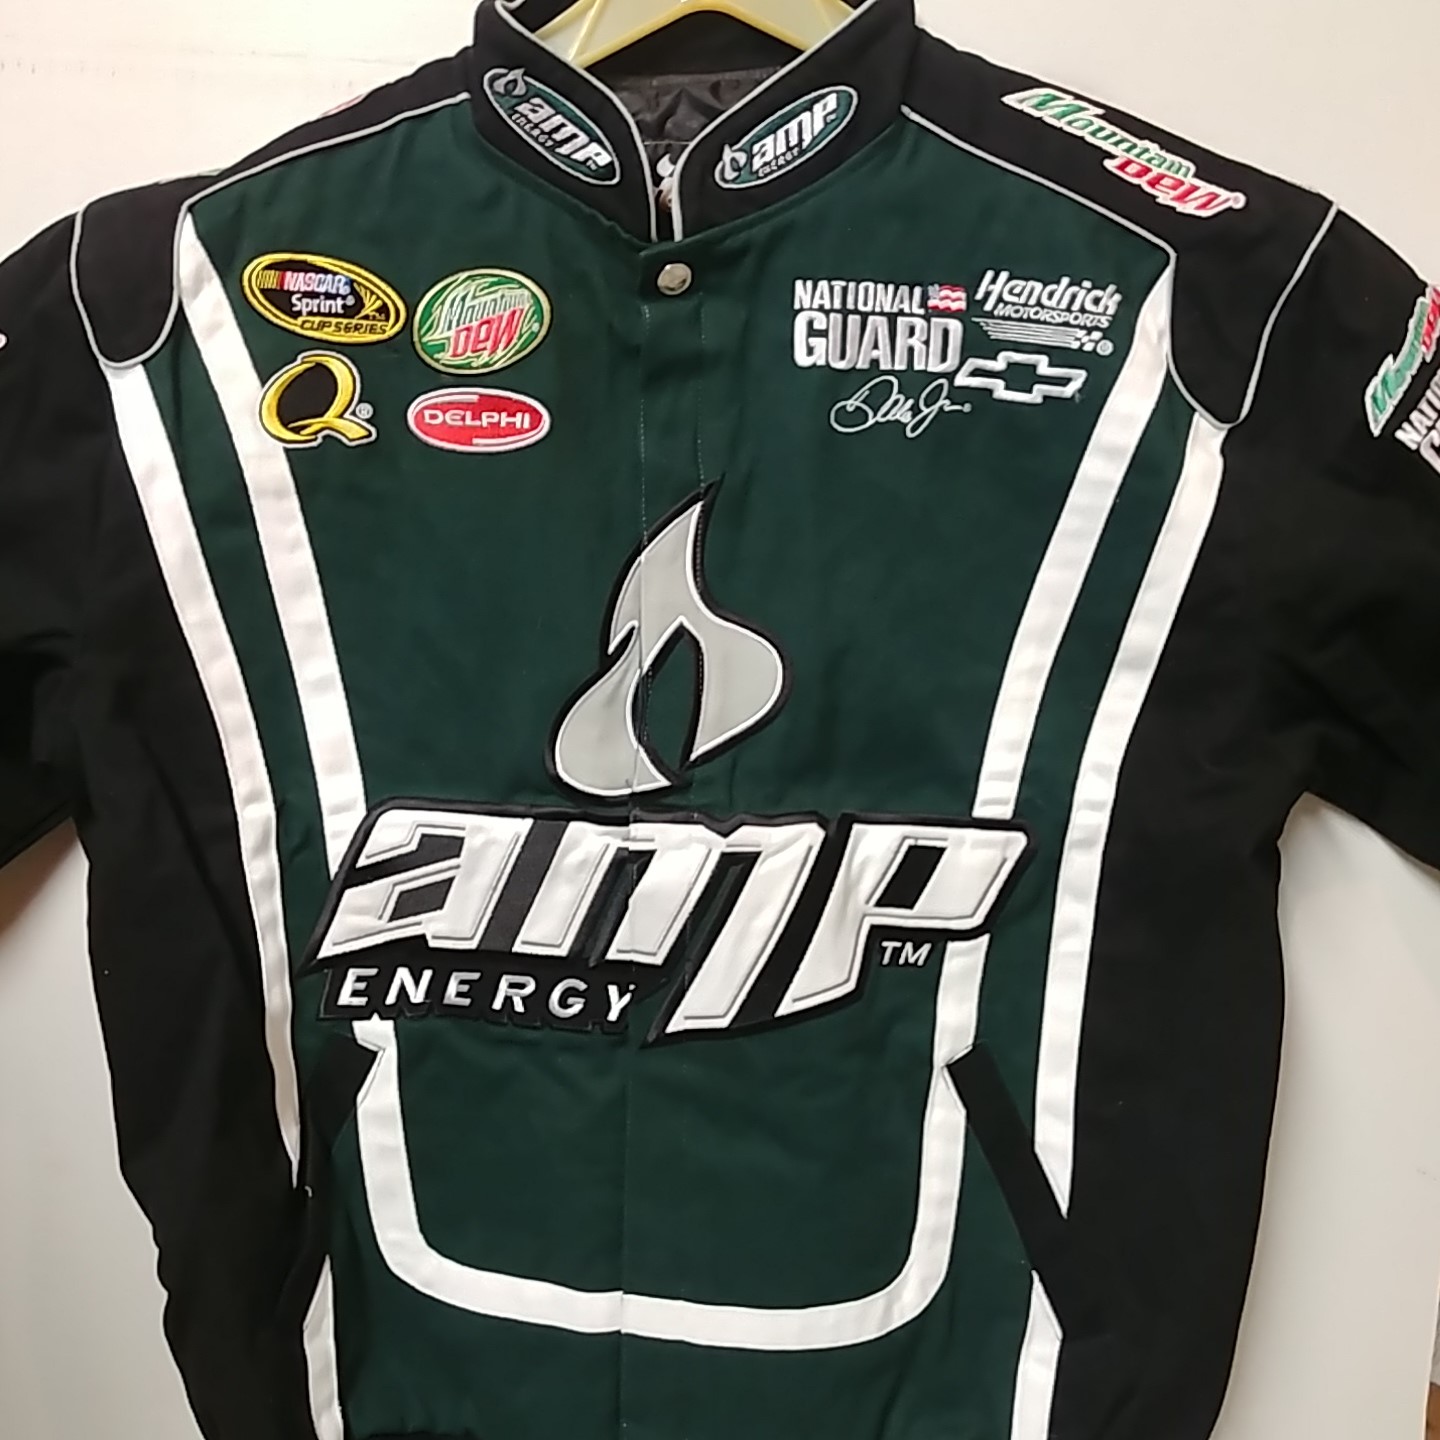 2008 Dale Earnhardt Jr AMP Energy "Extreme Green" Uniform Jacket